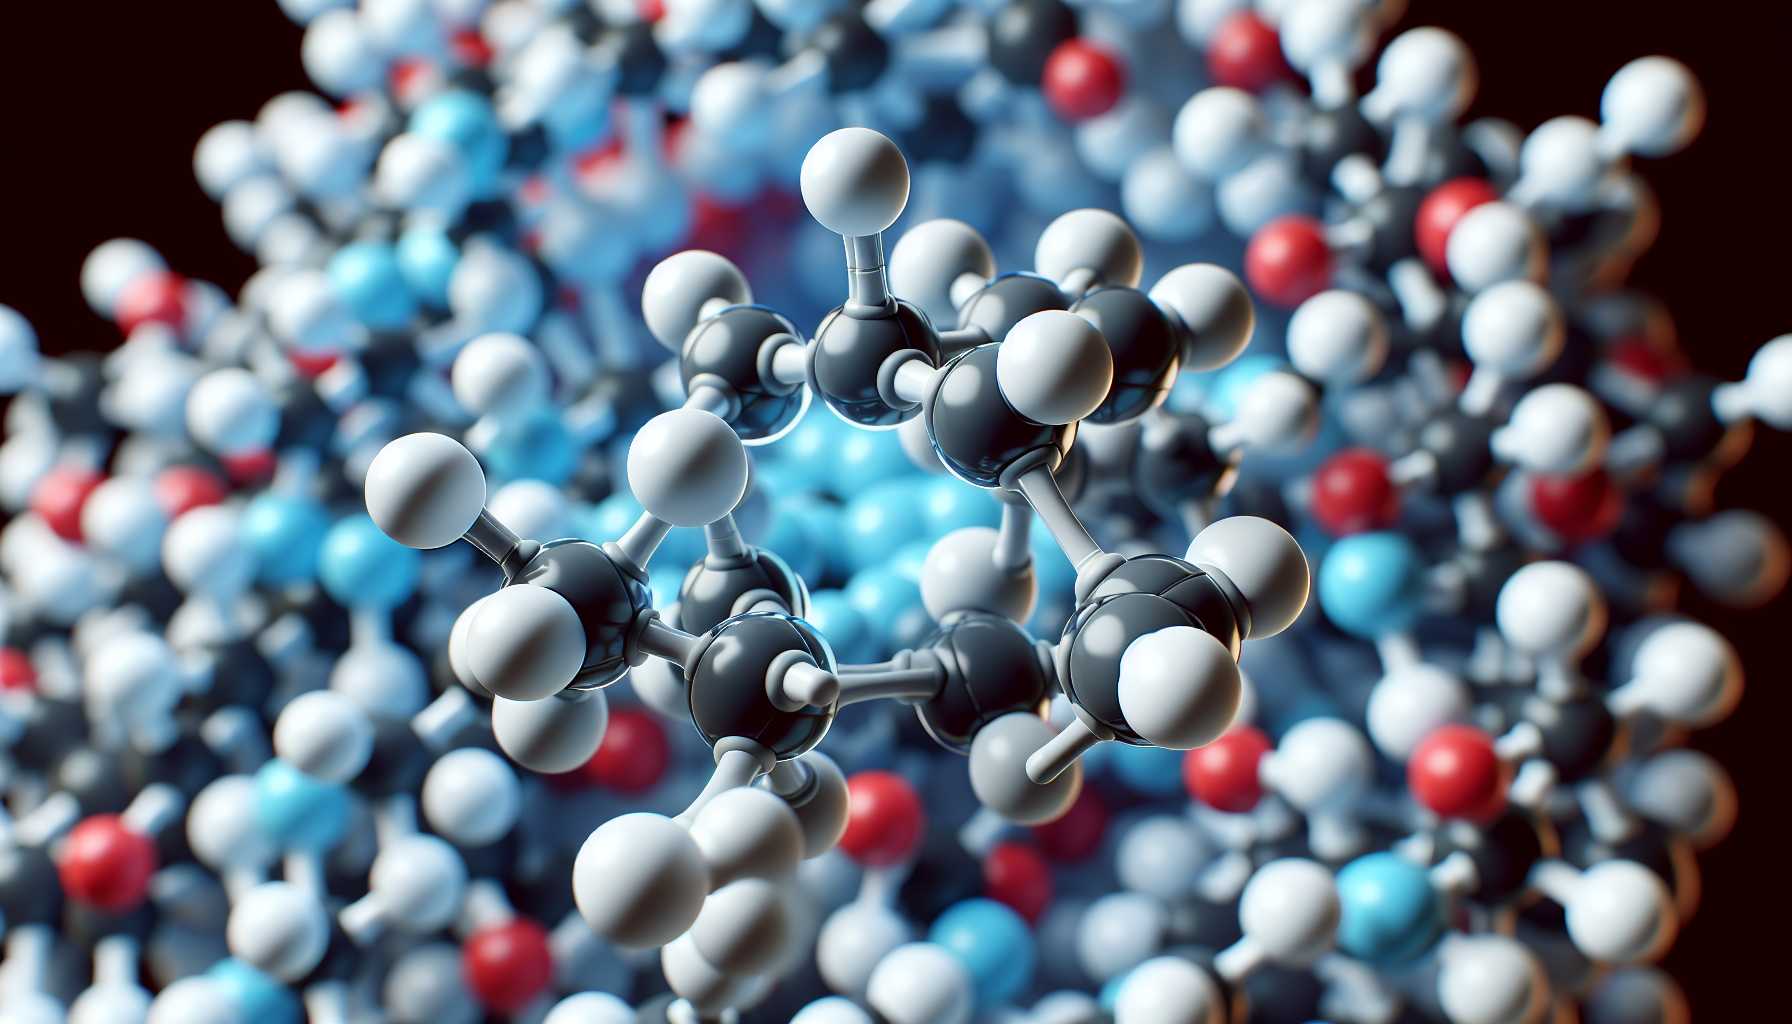 Glycine chemical compound molecular model